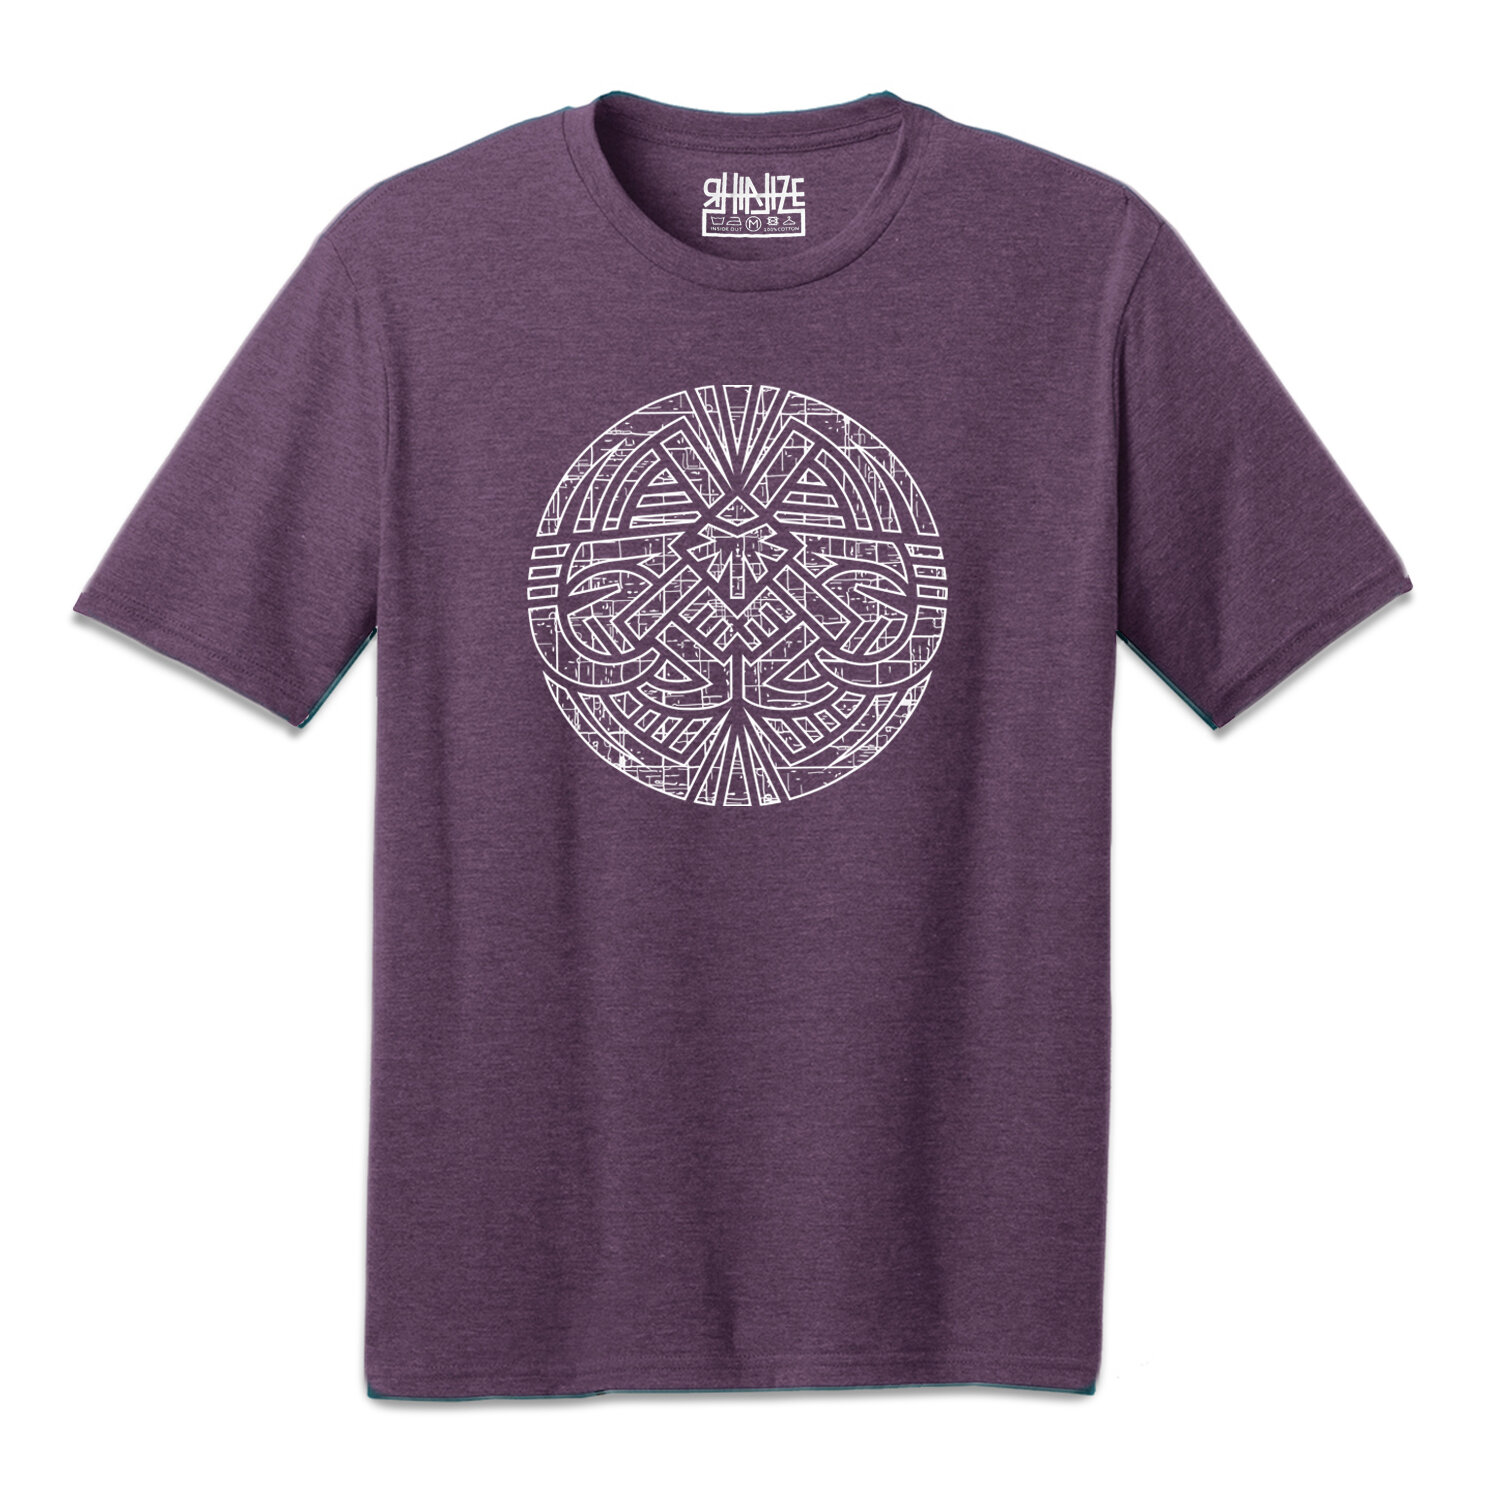 Rhialize-Evolver-Heather-Purple-Shirt.jpg